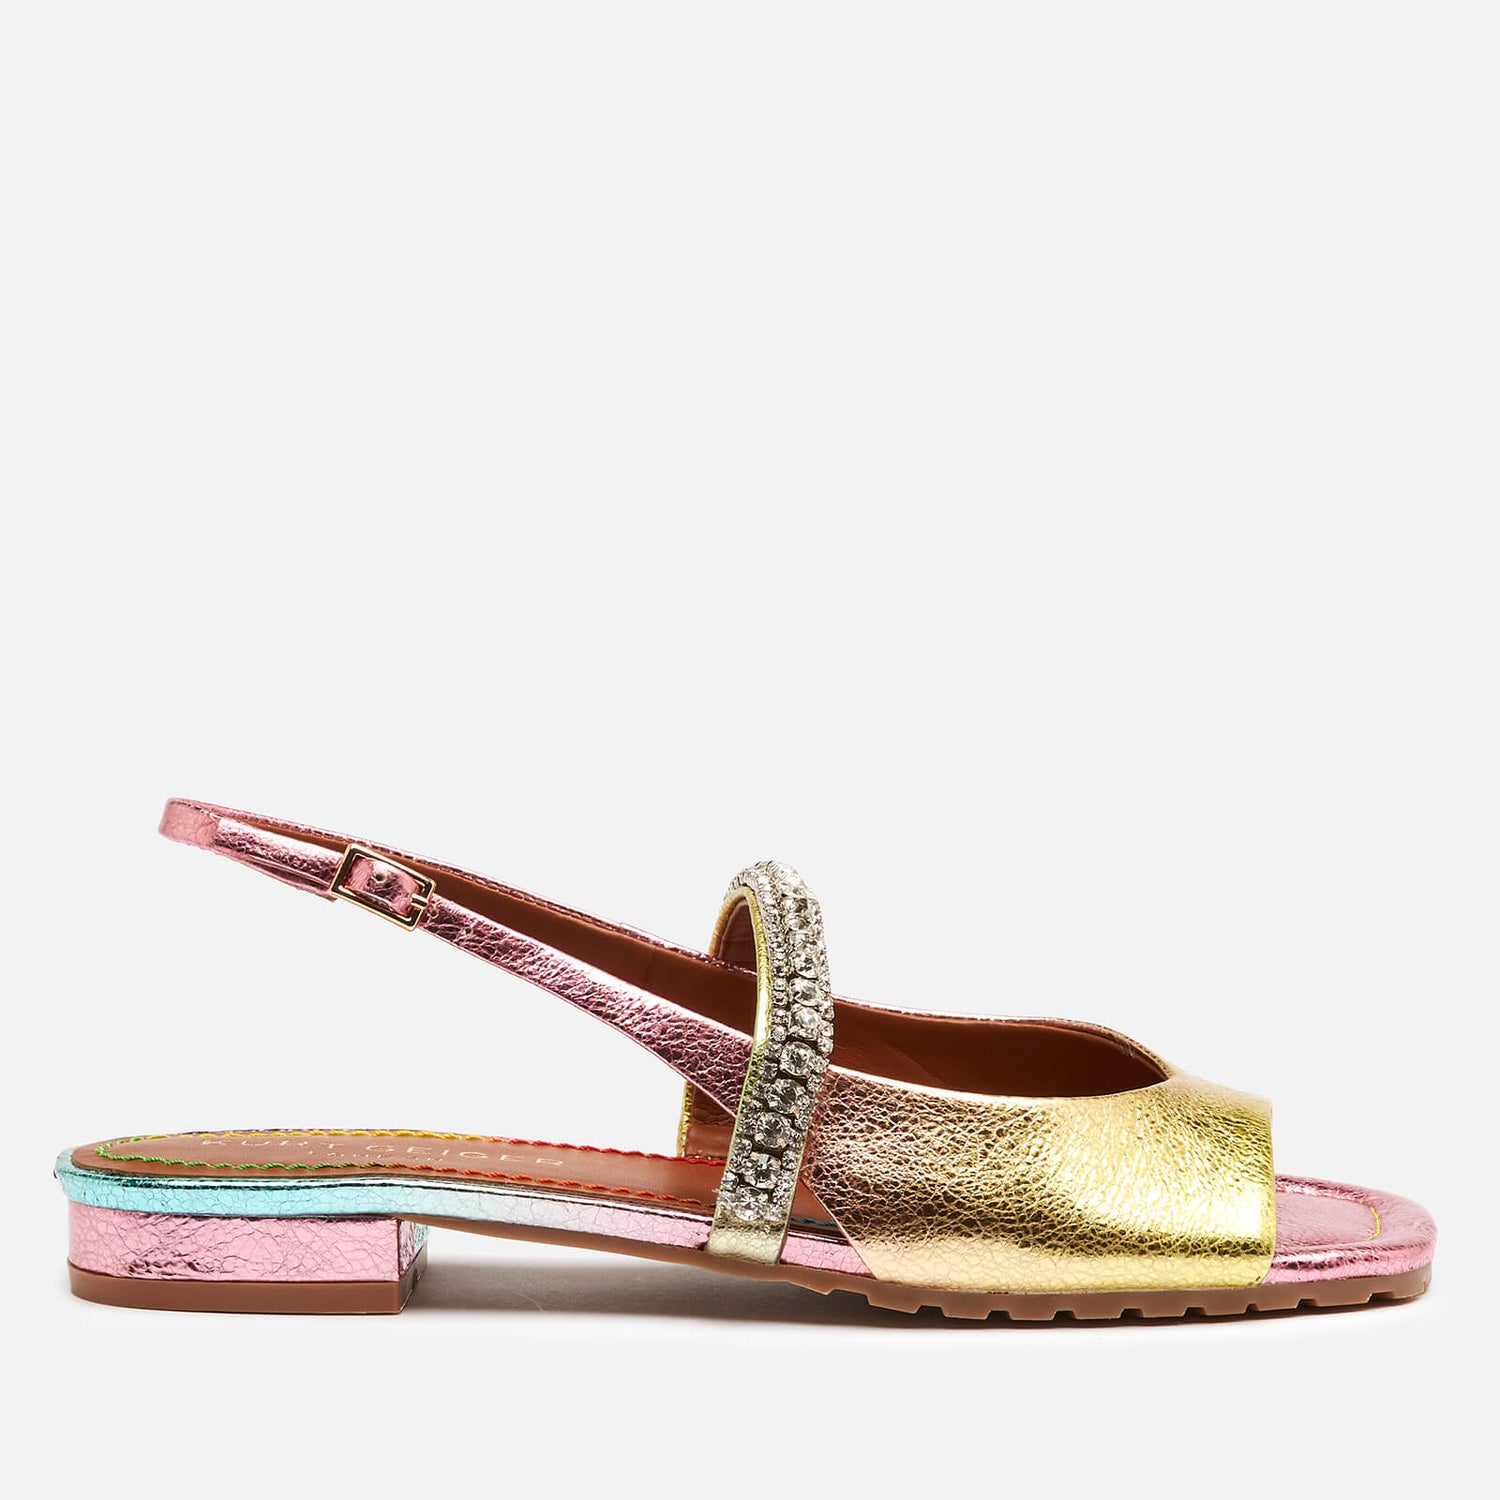 Kurt Geiger London Women's Princeley Leather Sandals - Pink Comb - UK 4